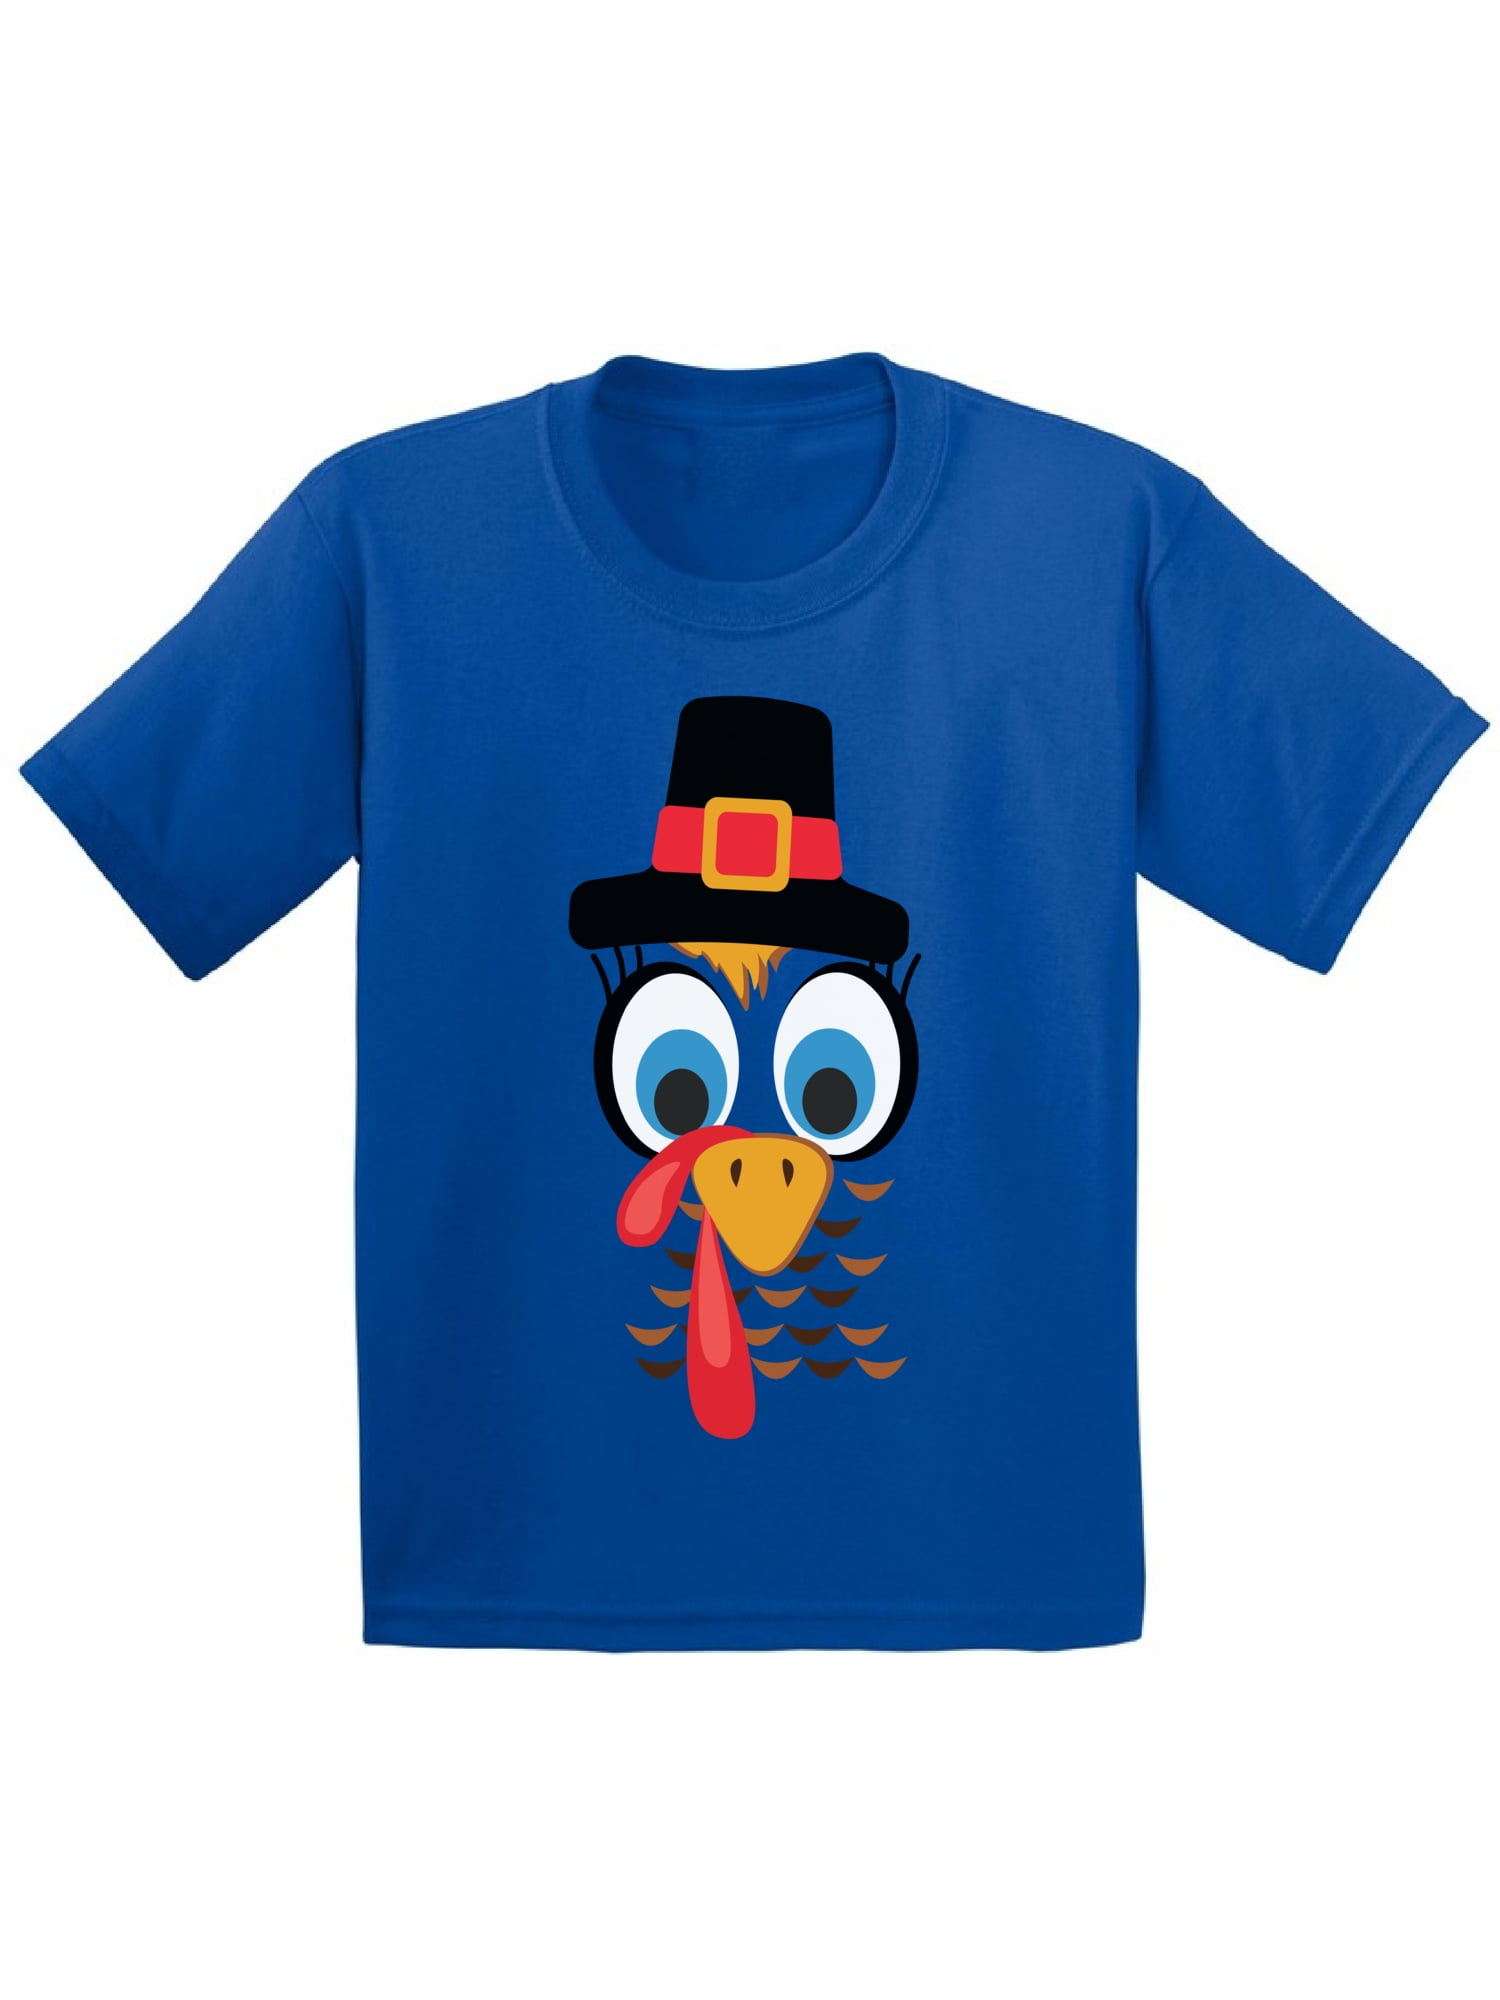 Kids Thanksgiving Personalized Thanksgiving Raglan Applique Thanksgiving Shirt Embroidery Football Turkey Top Turkey Shirt